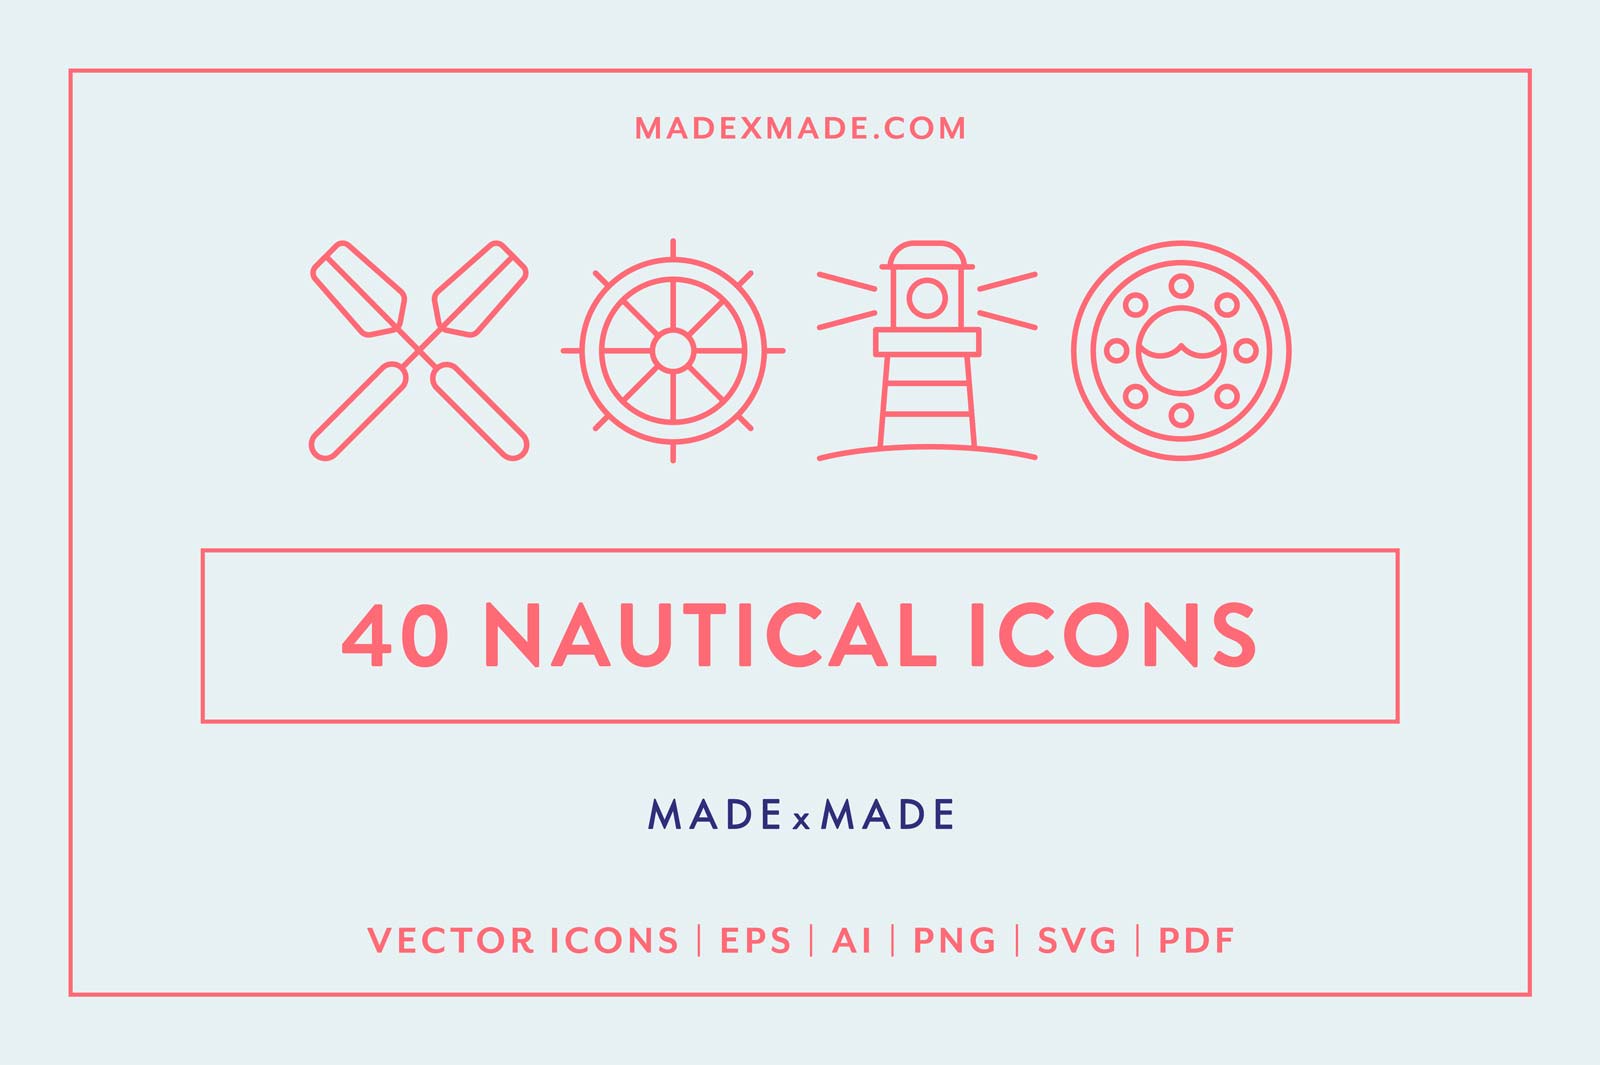 made x made icons nautical